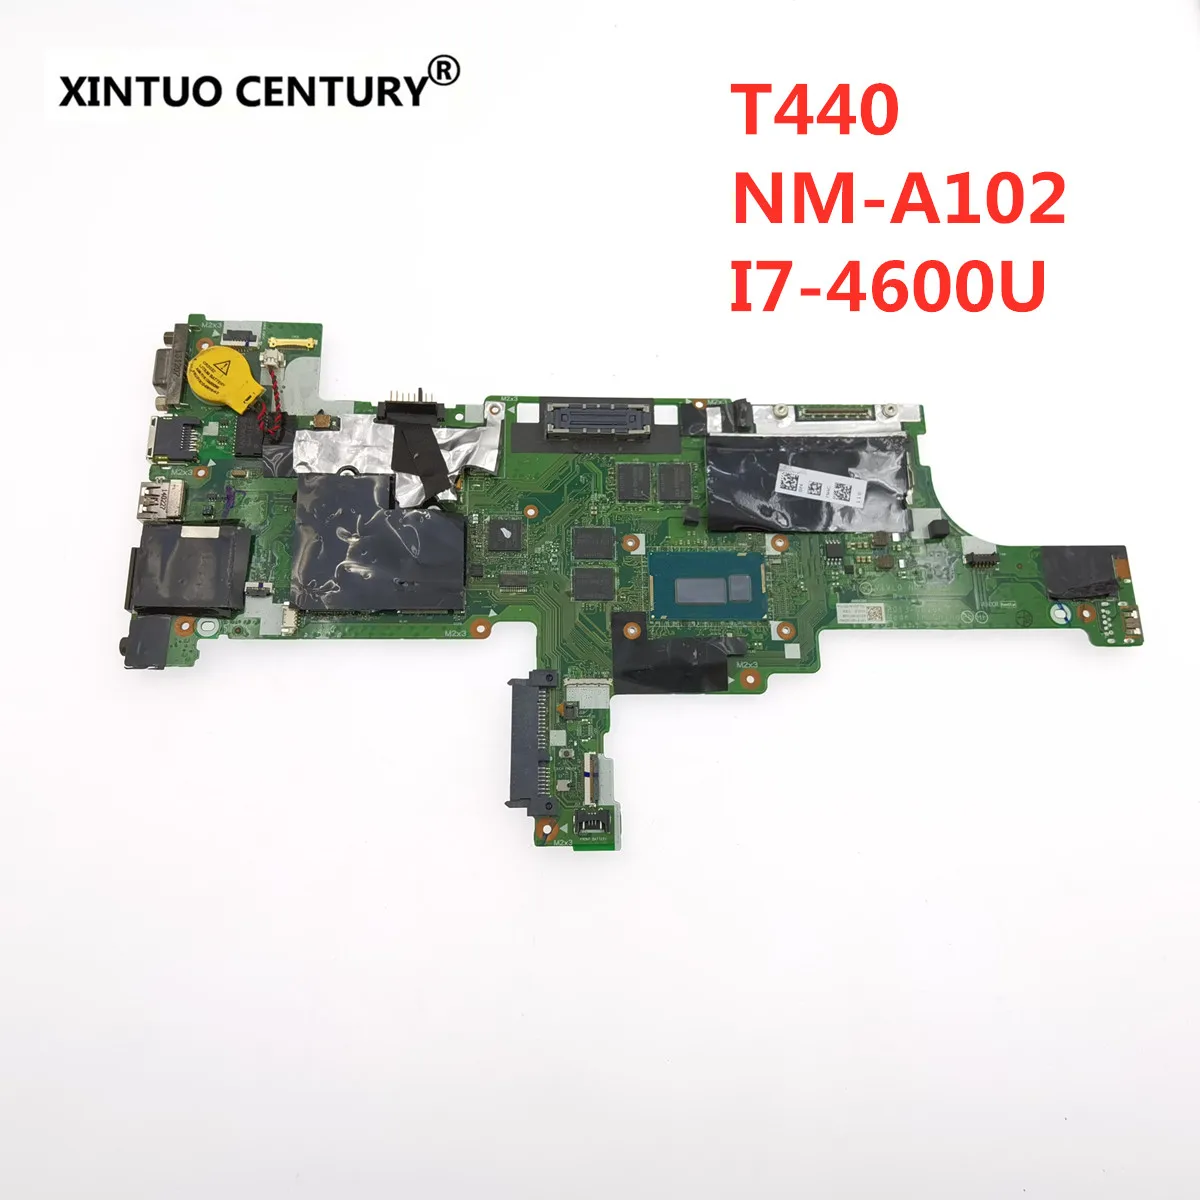 

For Lenovo Thinkpad T440 motherboard I7-4600U RAM 4G NM-A102 Laptop motherboard FRU:04X4098 04X5002 Mainboard 100% test work